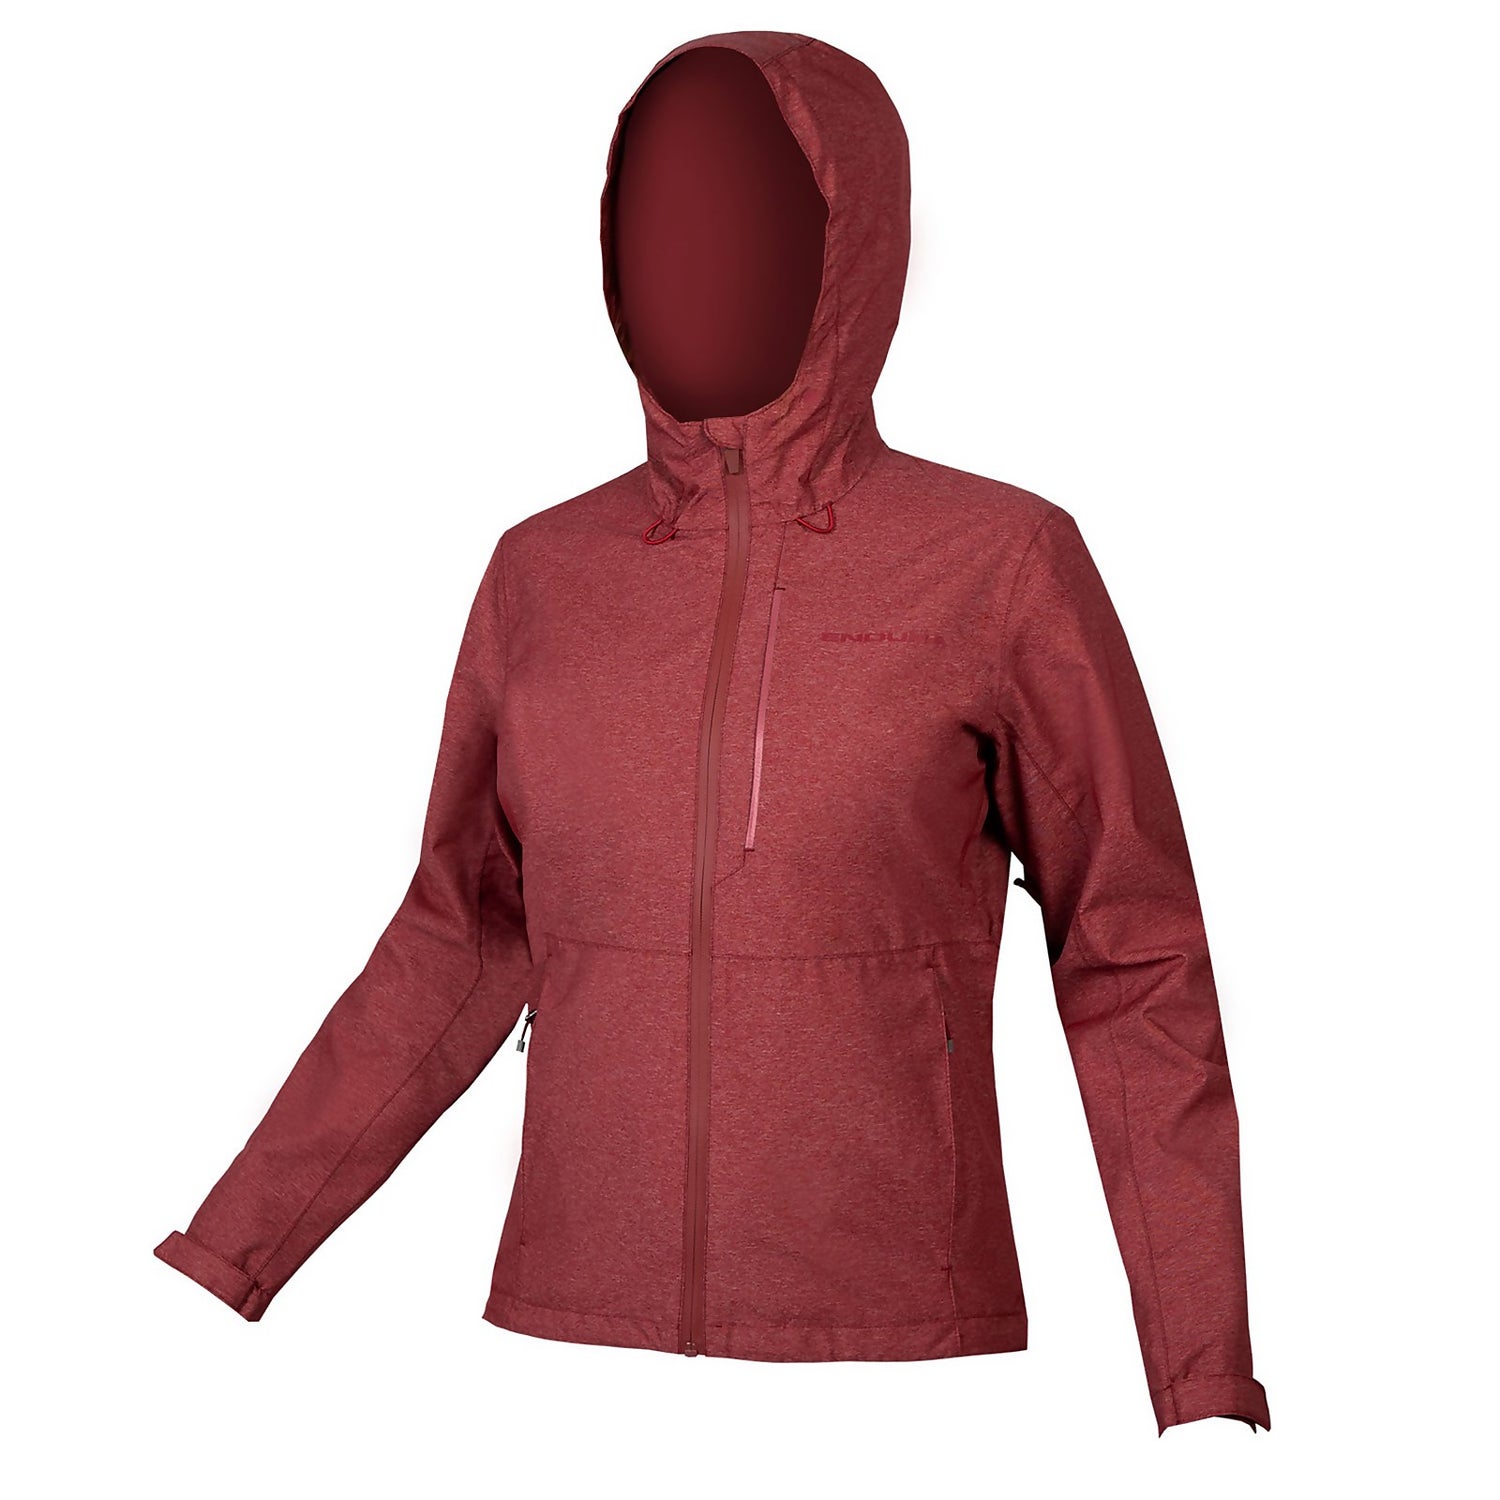 Women's Hummvee Waterproof Hooded Jacket - Cocoa - L